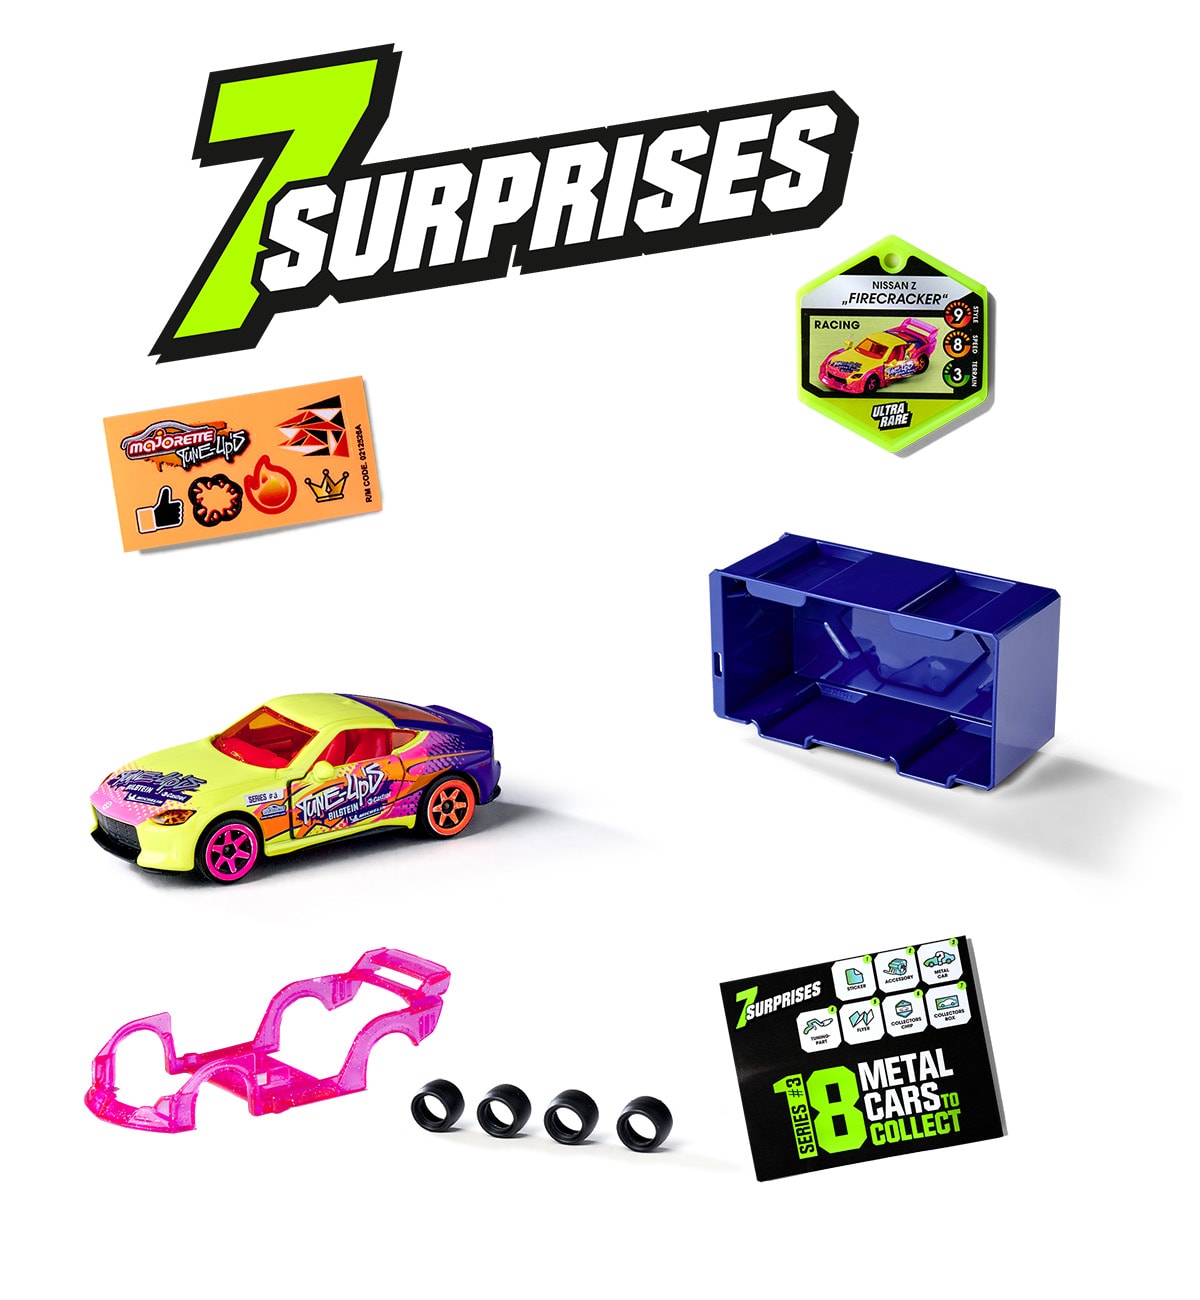 V-auto Majorette Tune Up's 7sorprese Toys Online in Promo for sale